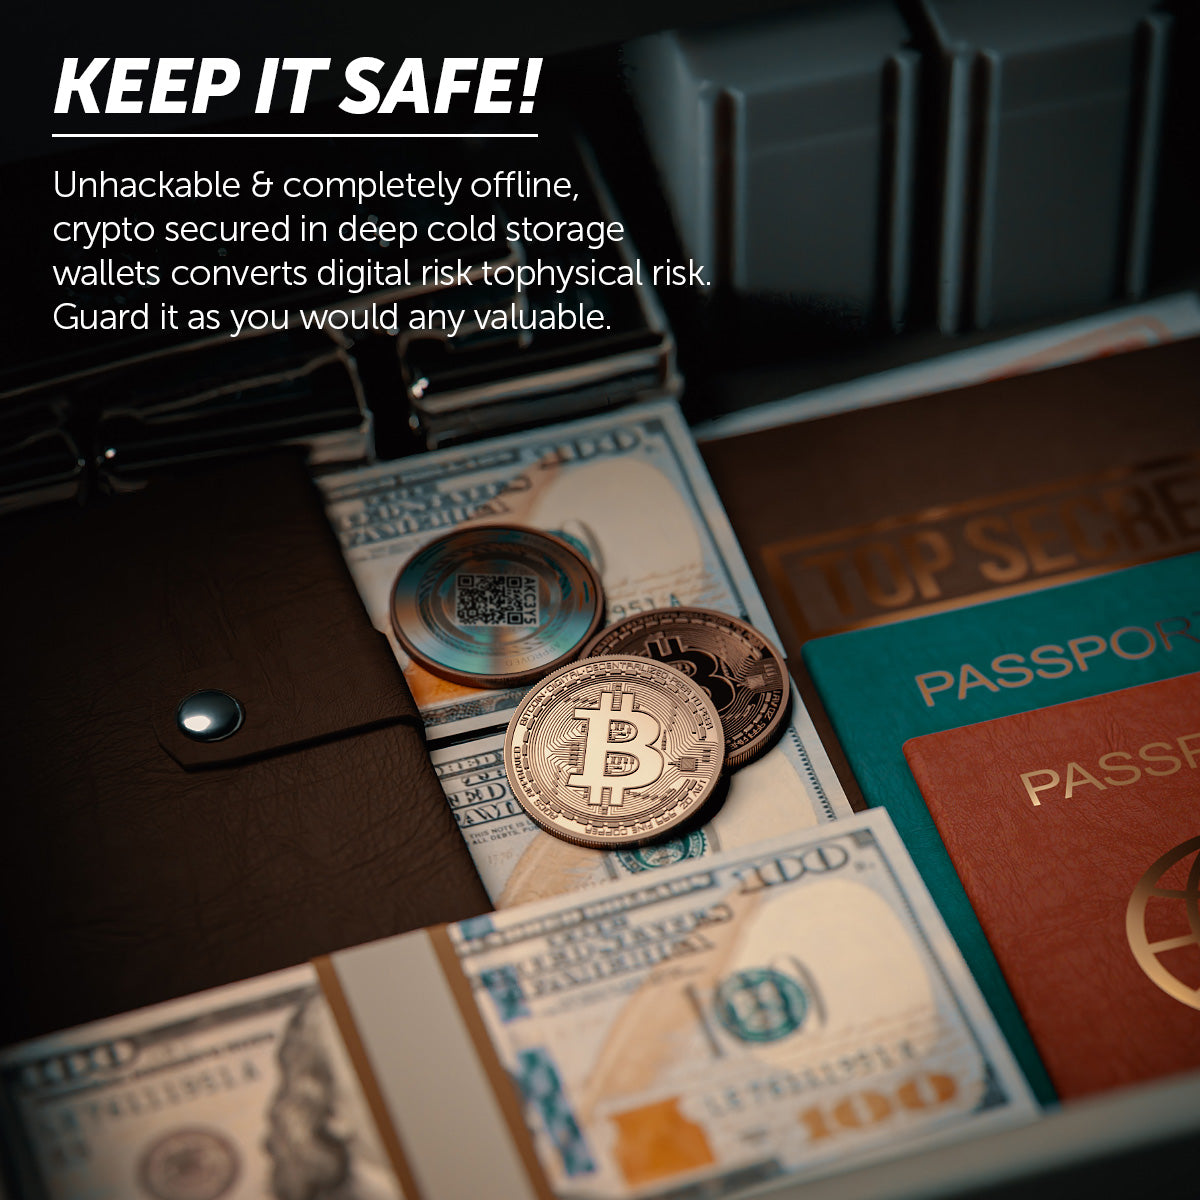 Bitcoin BTC Cold Storage Wallet 2-Pack Blockchain Mint